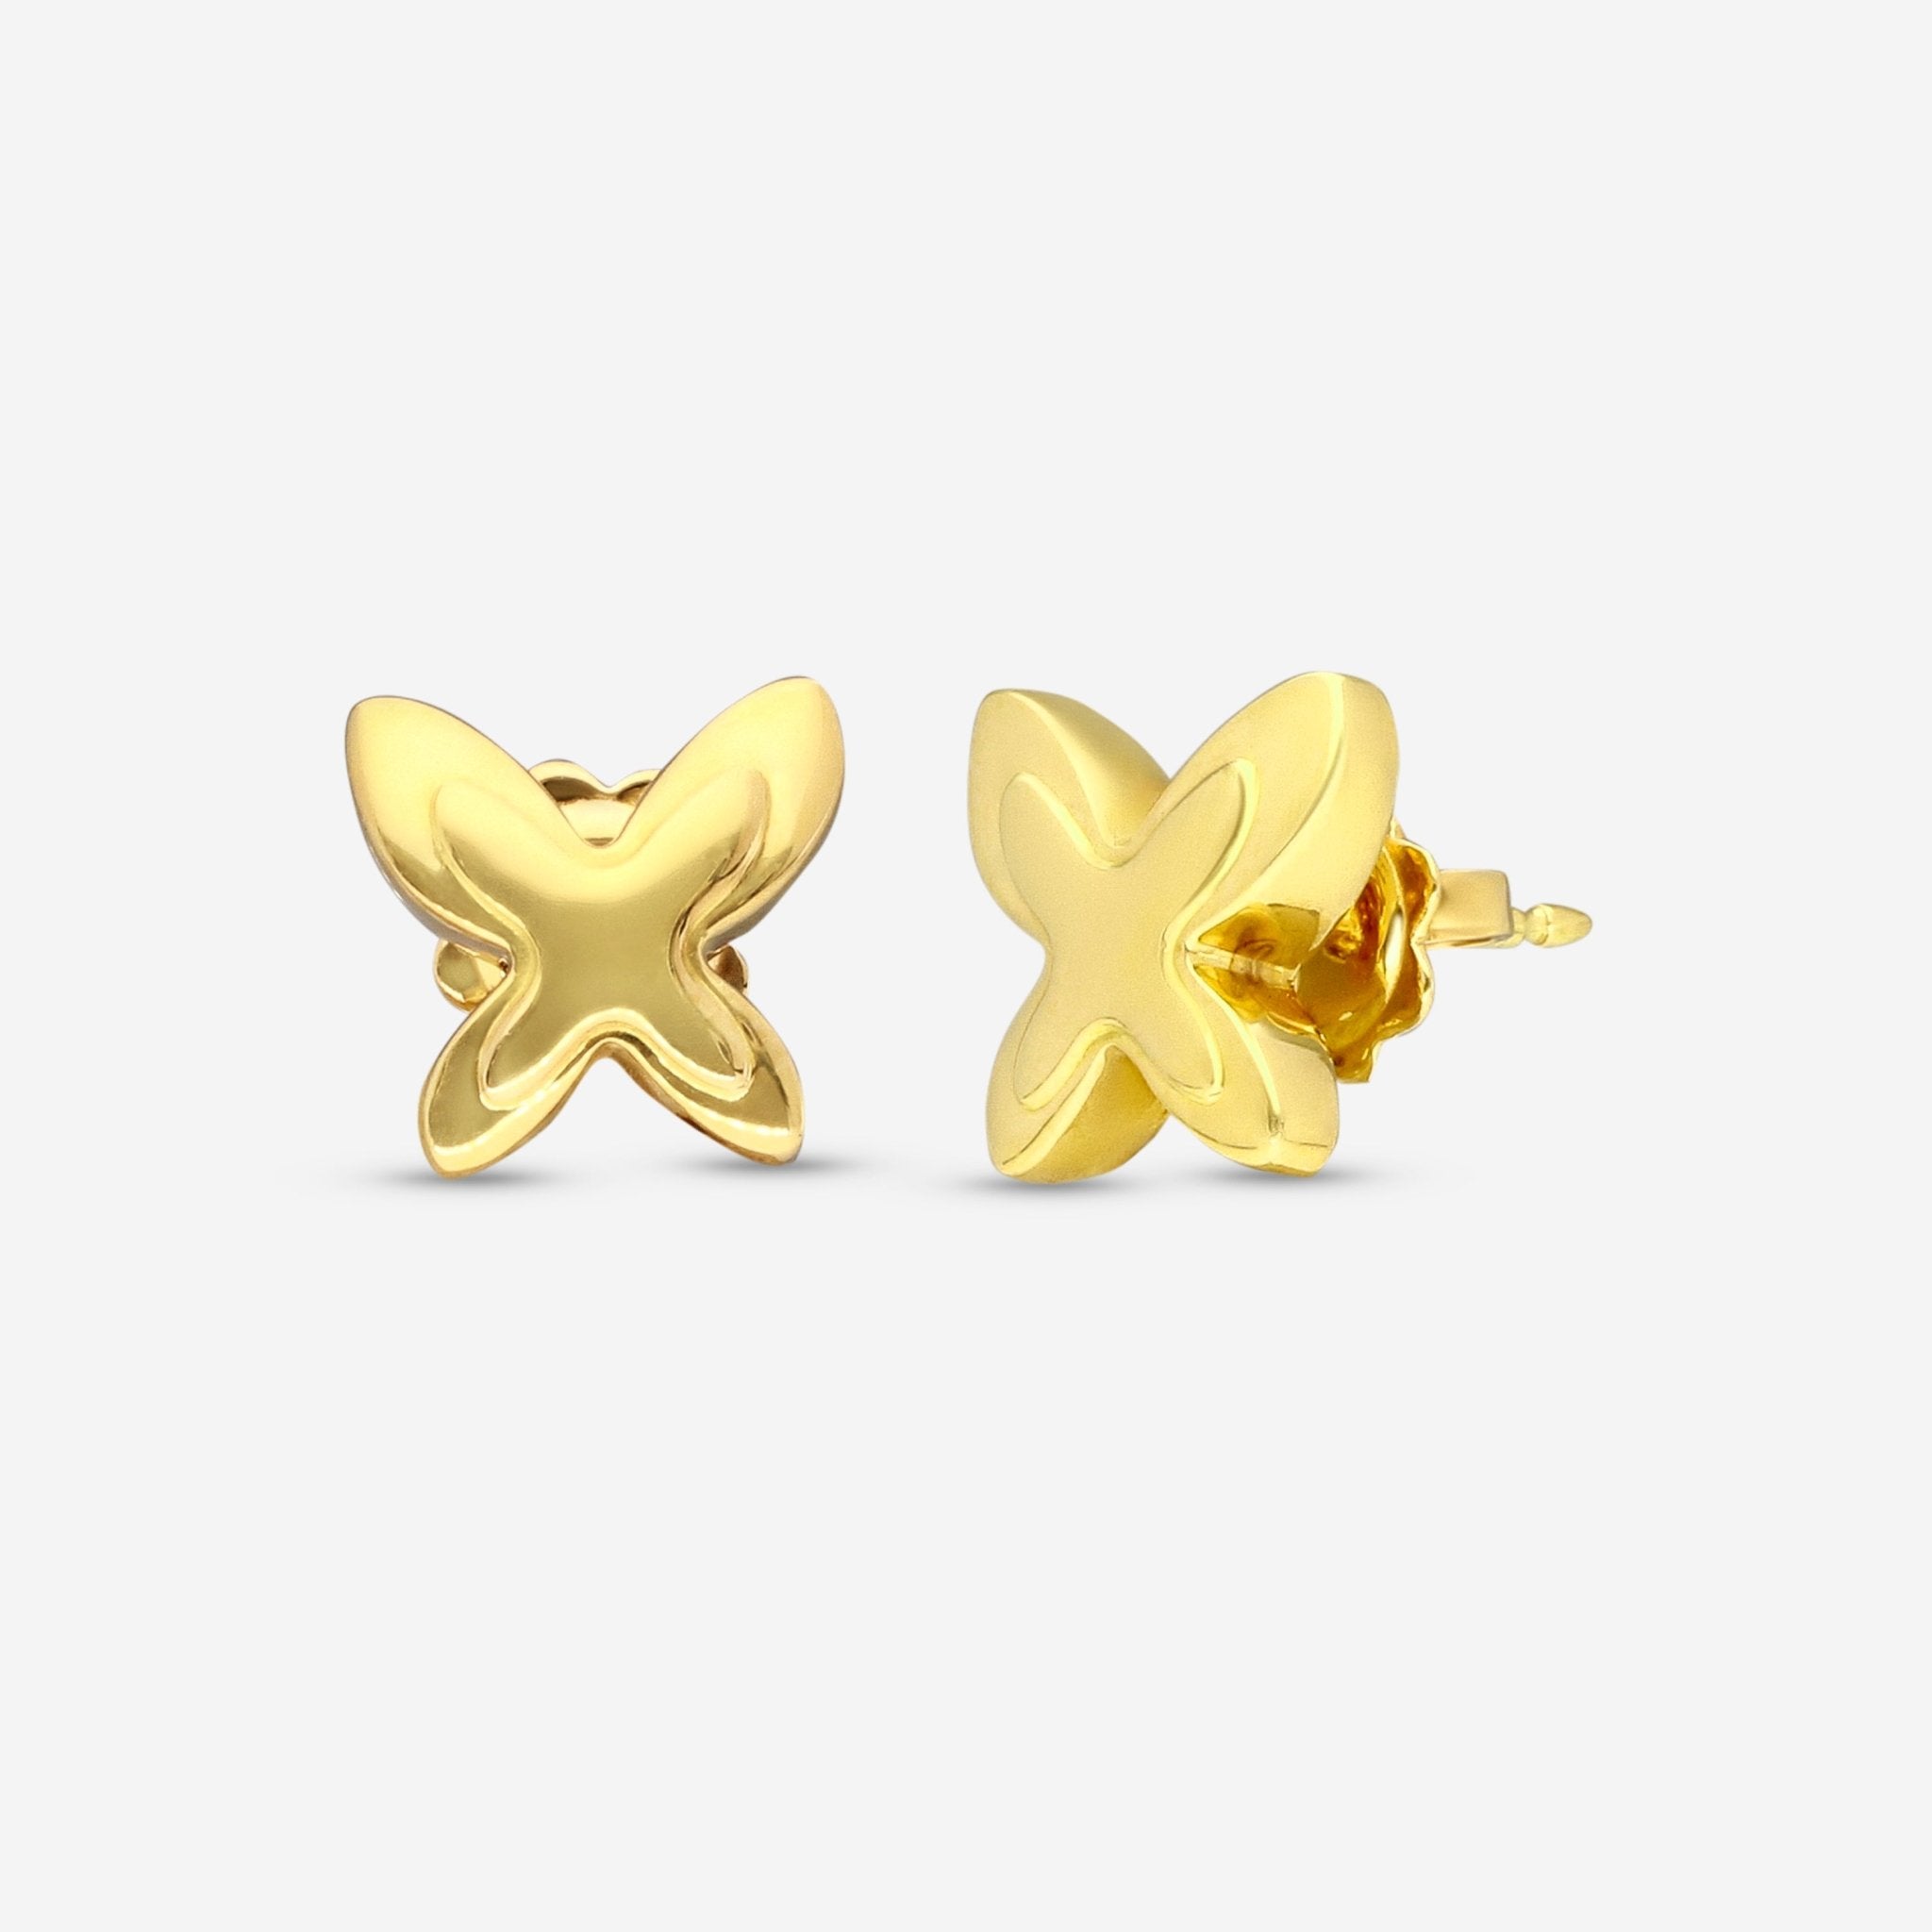 Mimi Milano Freevola 18K Yellow Gold, Stud Earrings OXM243G8 - THE SOLIST - Mimi Milano